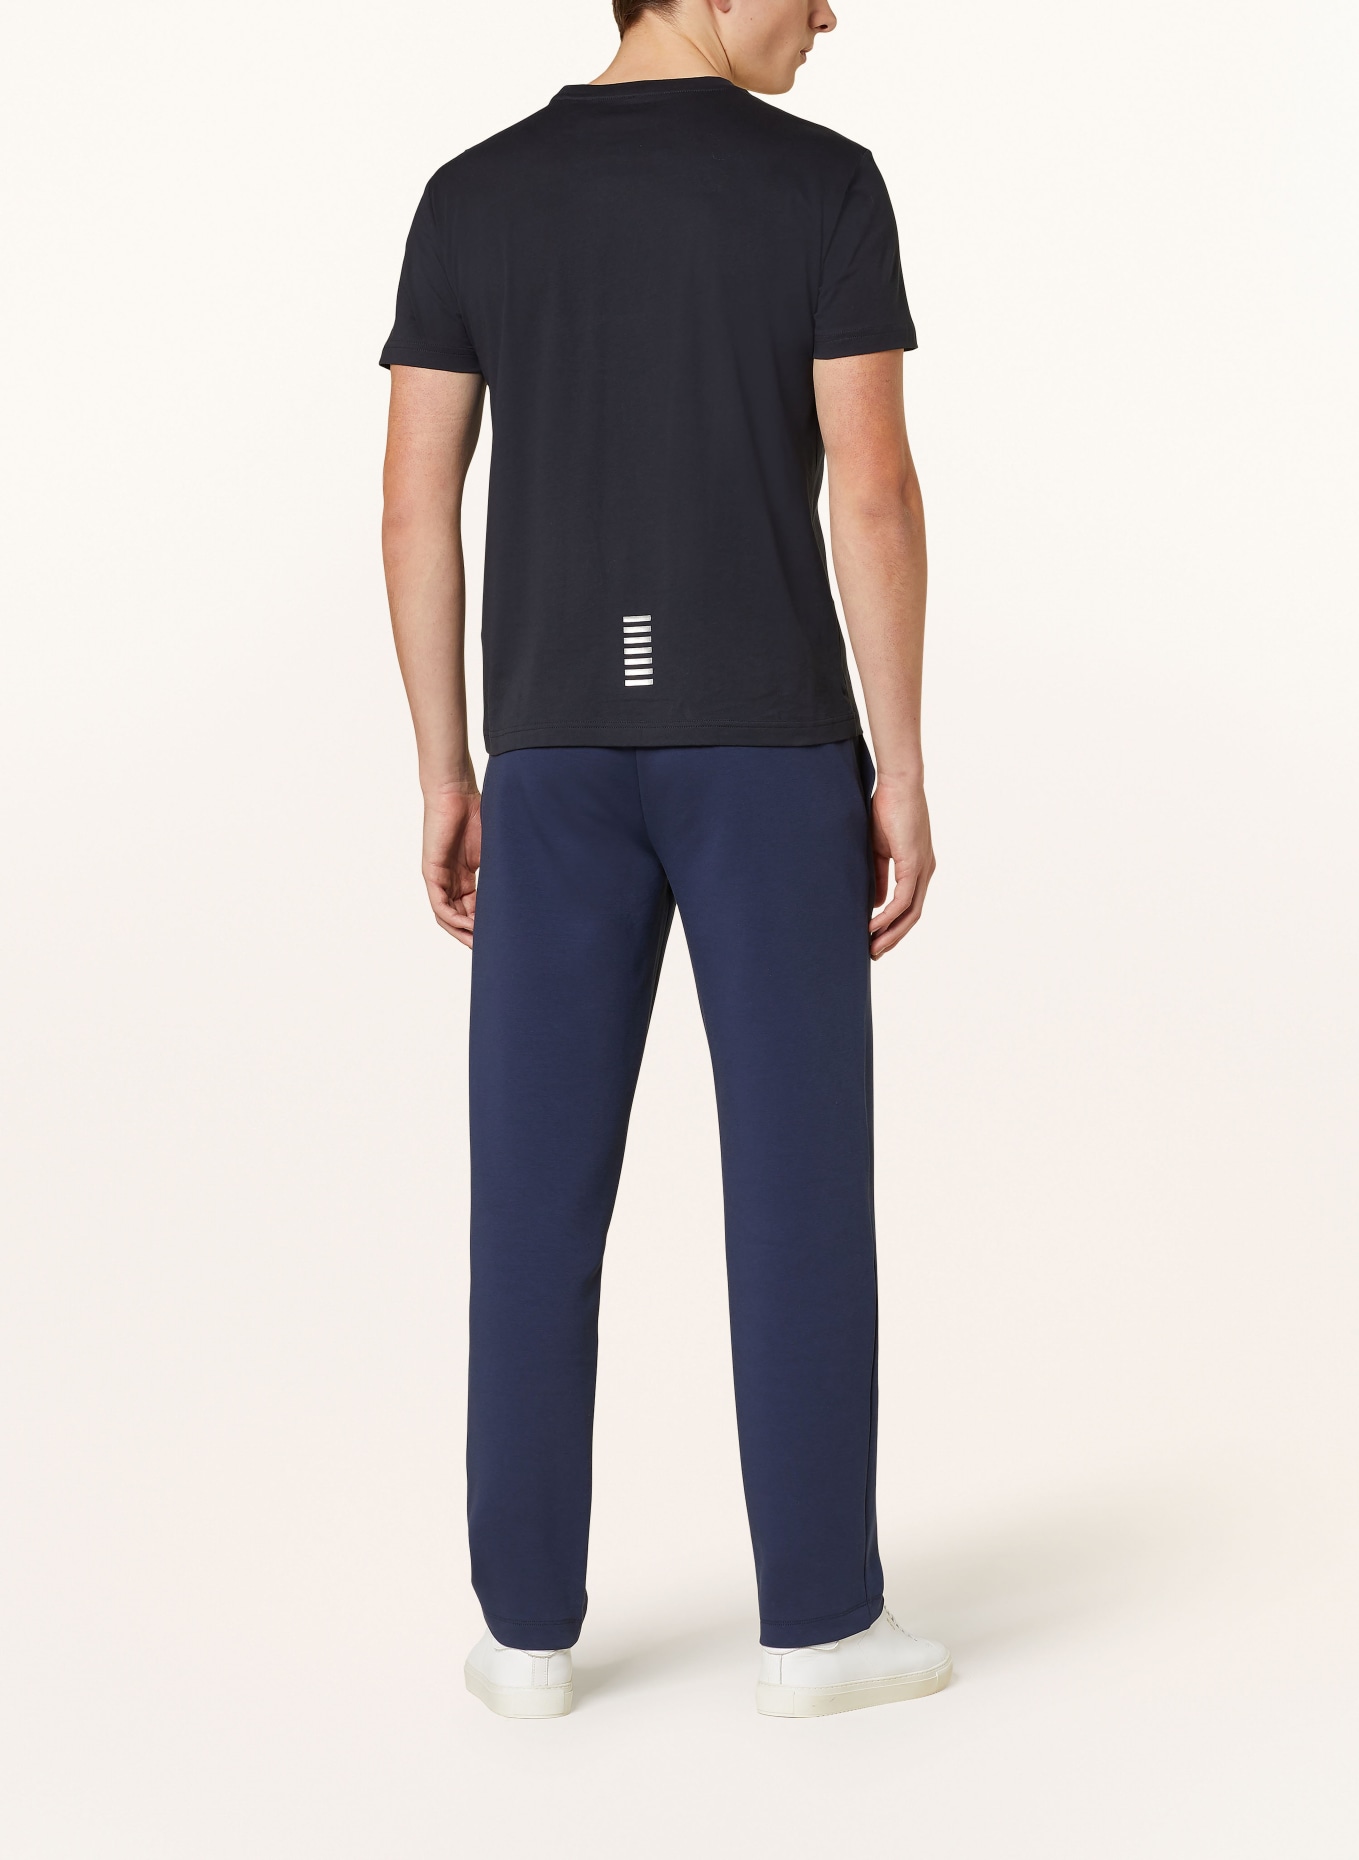 EA7 EMPORIO ARMANI Pants in jogger style, Color: DARK BLUE (Image 3)